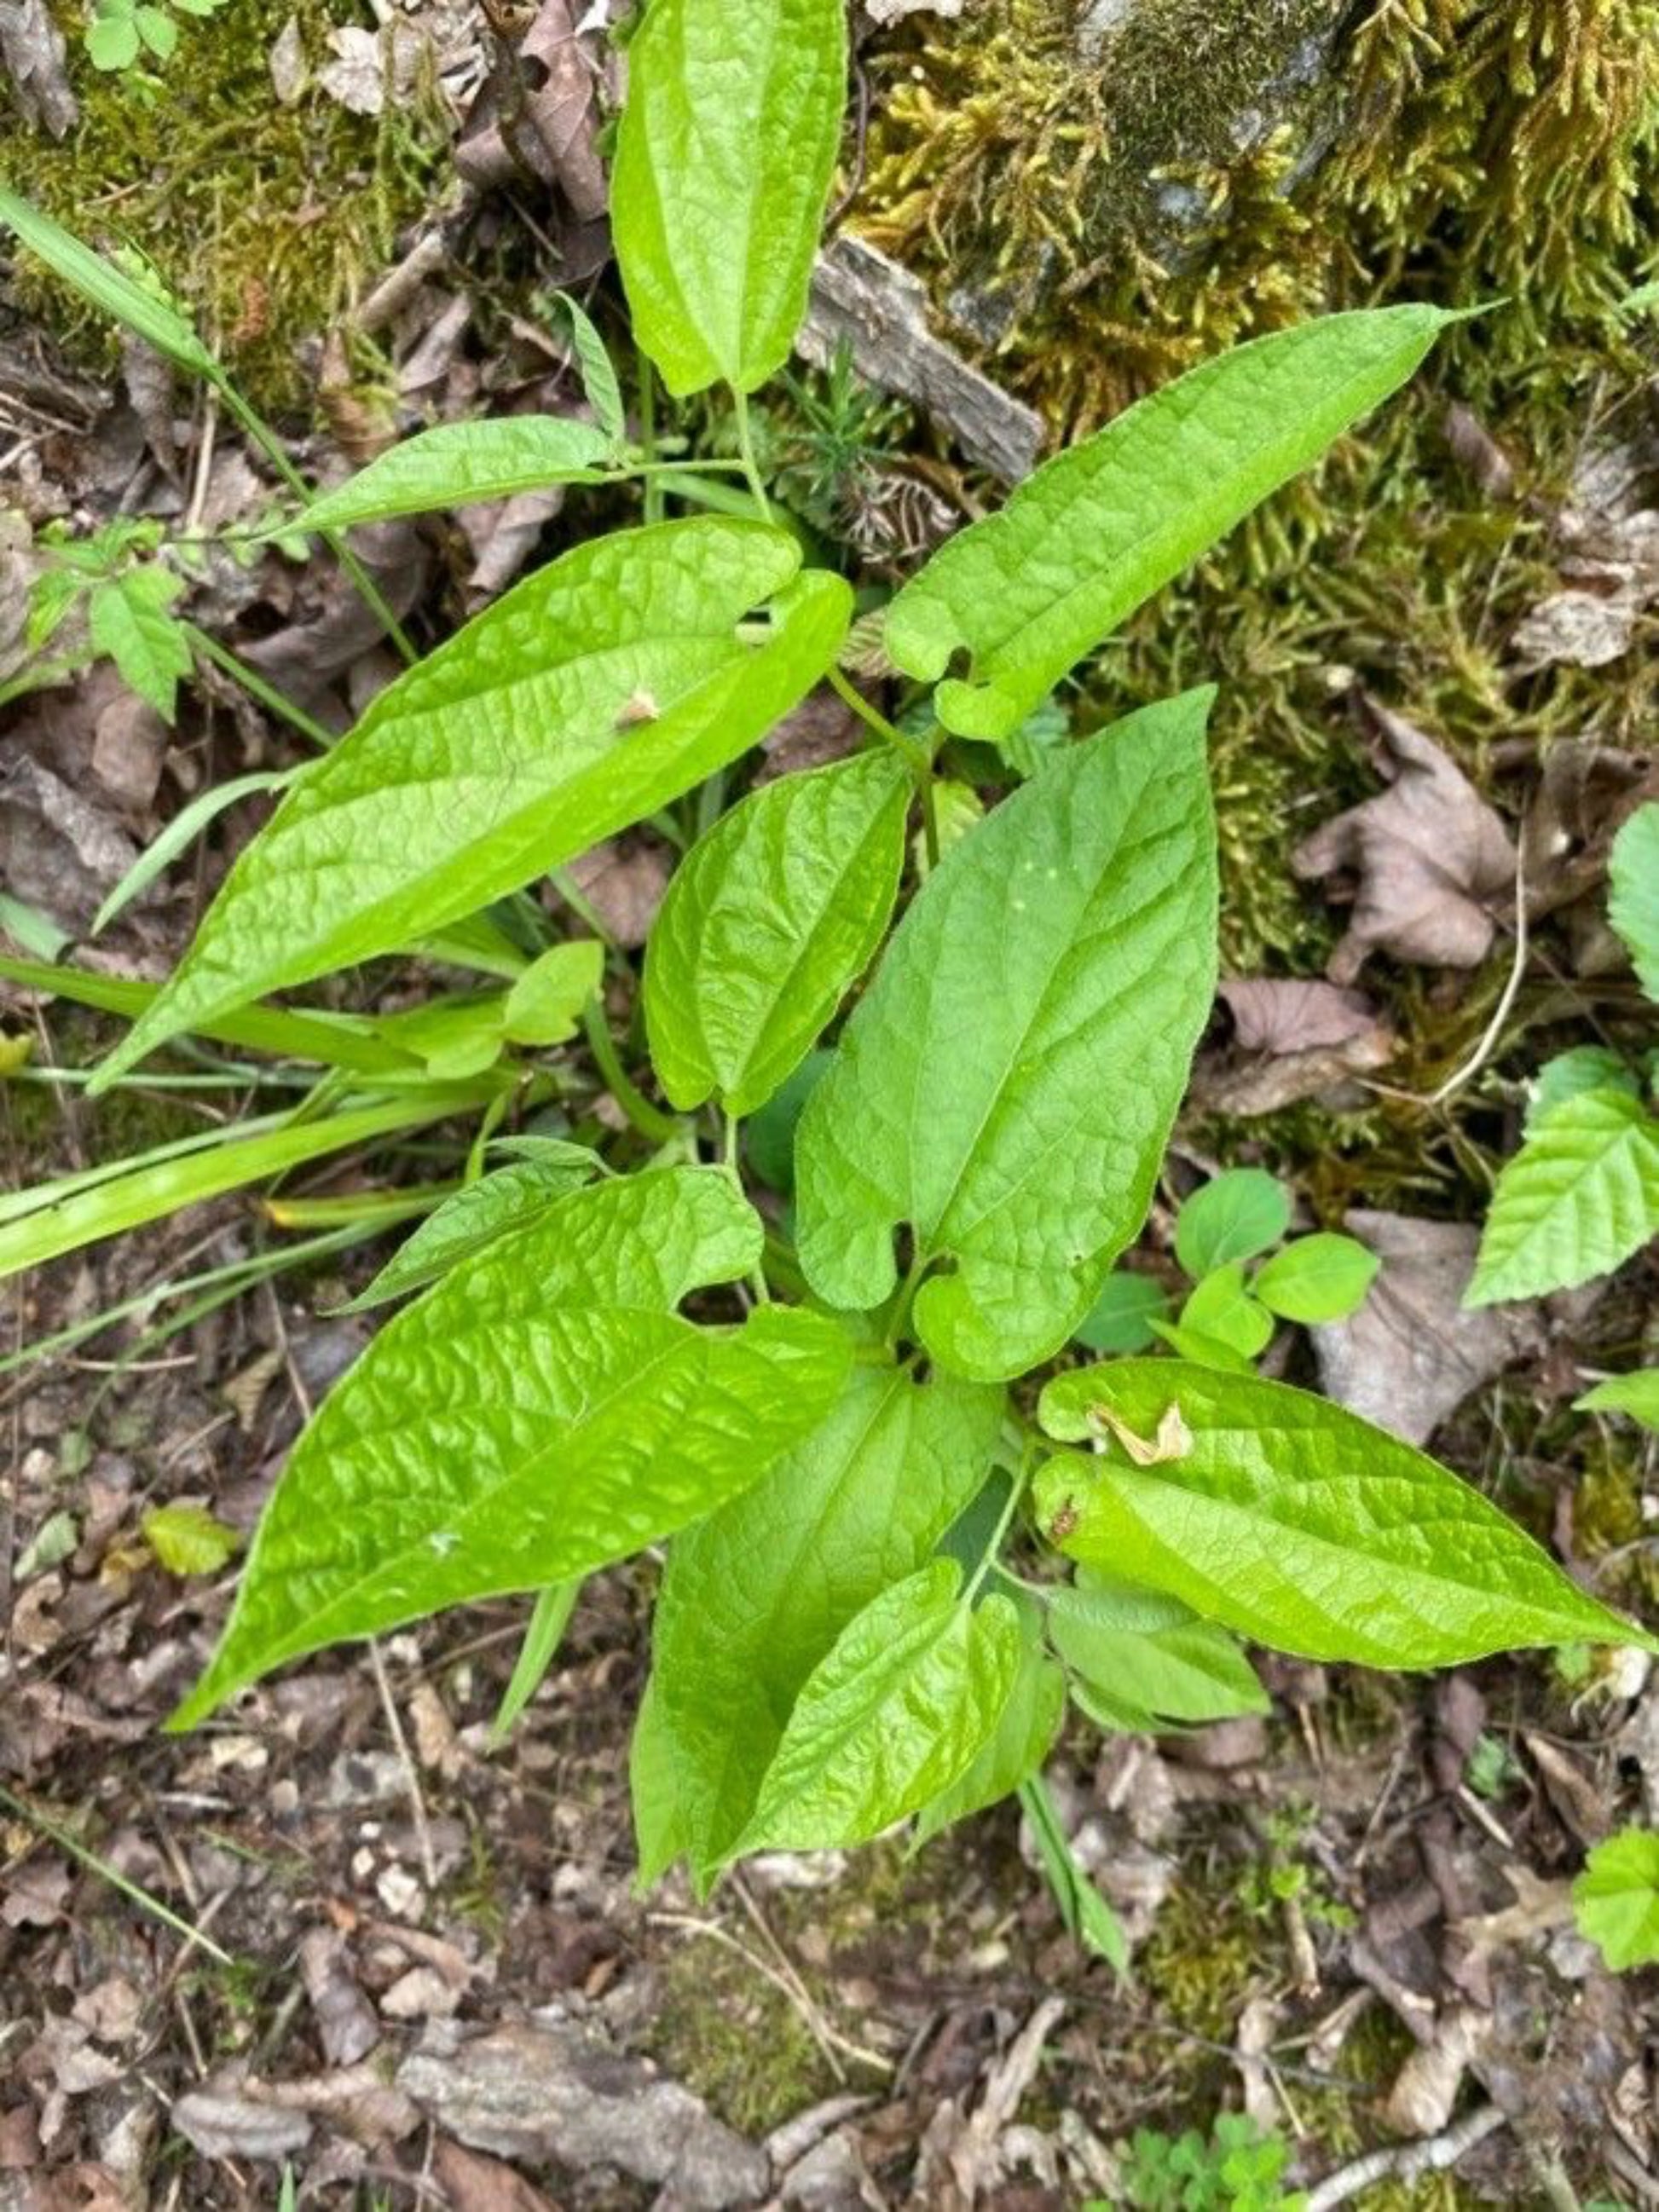 aristolochia serpentario " virginia snakeroot" host plant for pipevine and polydamas swallowtail